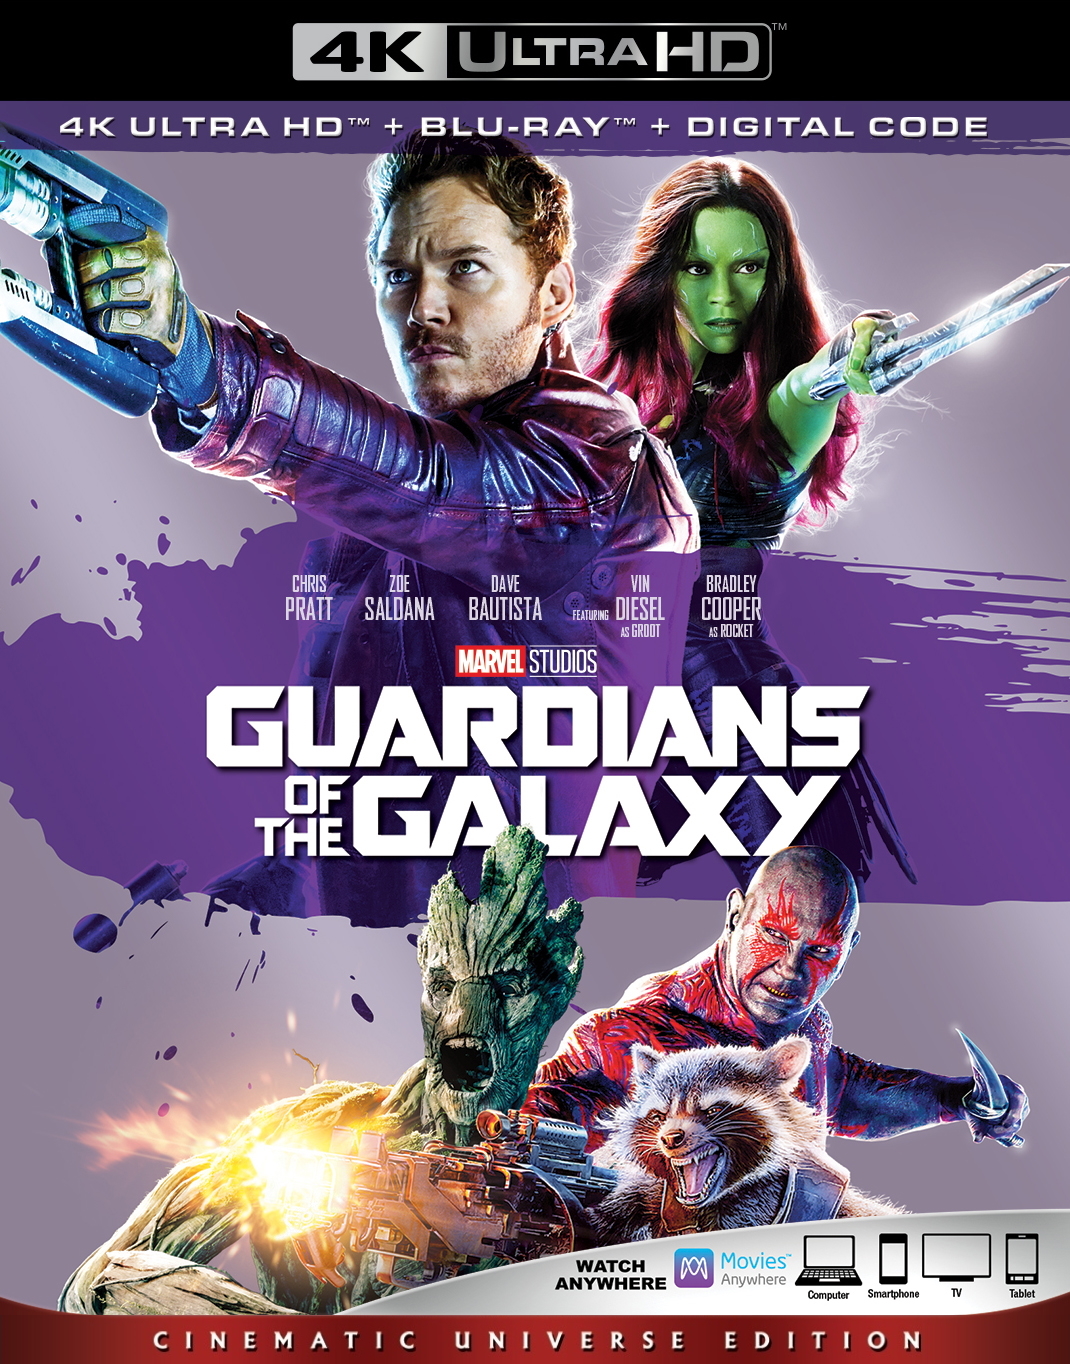 [银河护卫队].Guardians.of.the.Galaxy.2014.3D.BluRay.1080p.AVC.DTS-HD.MA.7.1-LHTDIY   41.61G-1.jpg